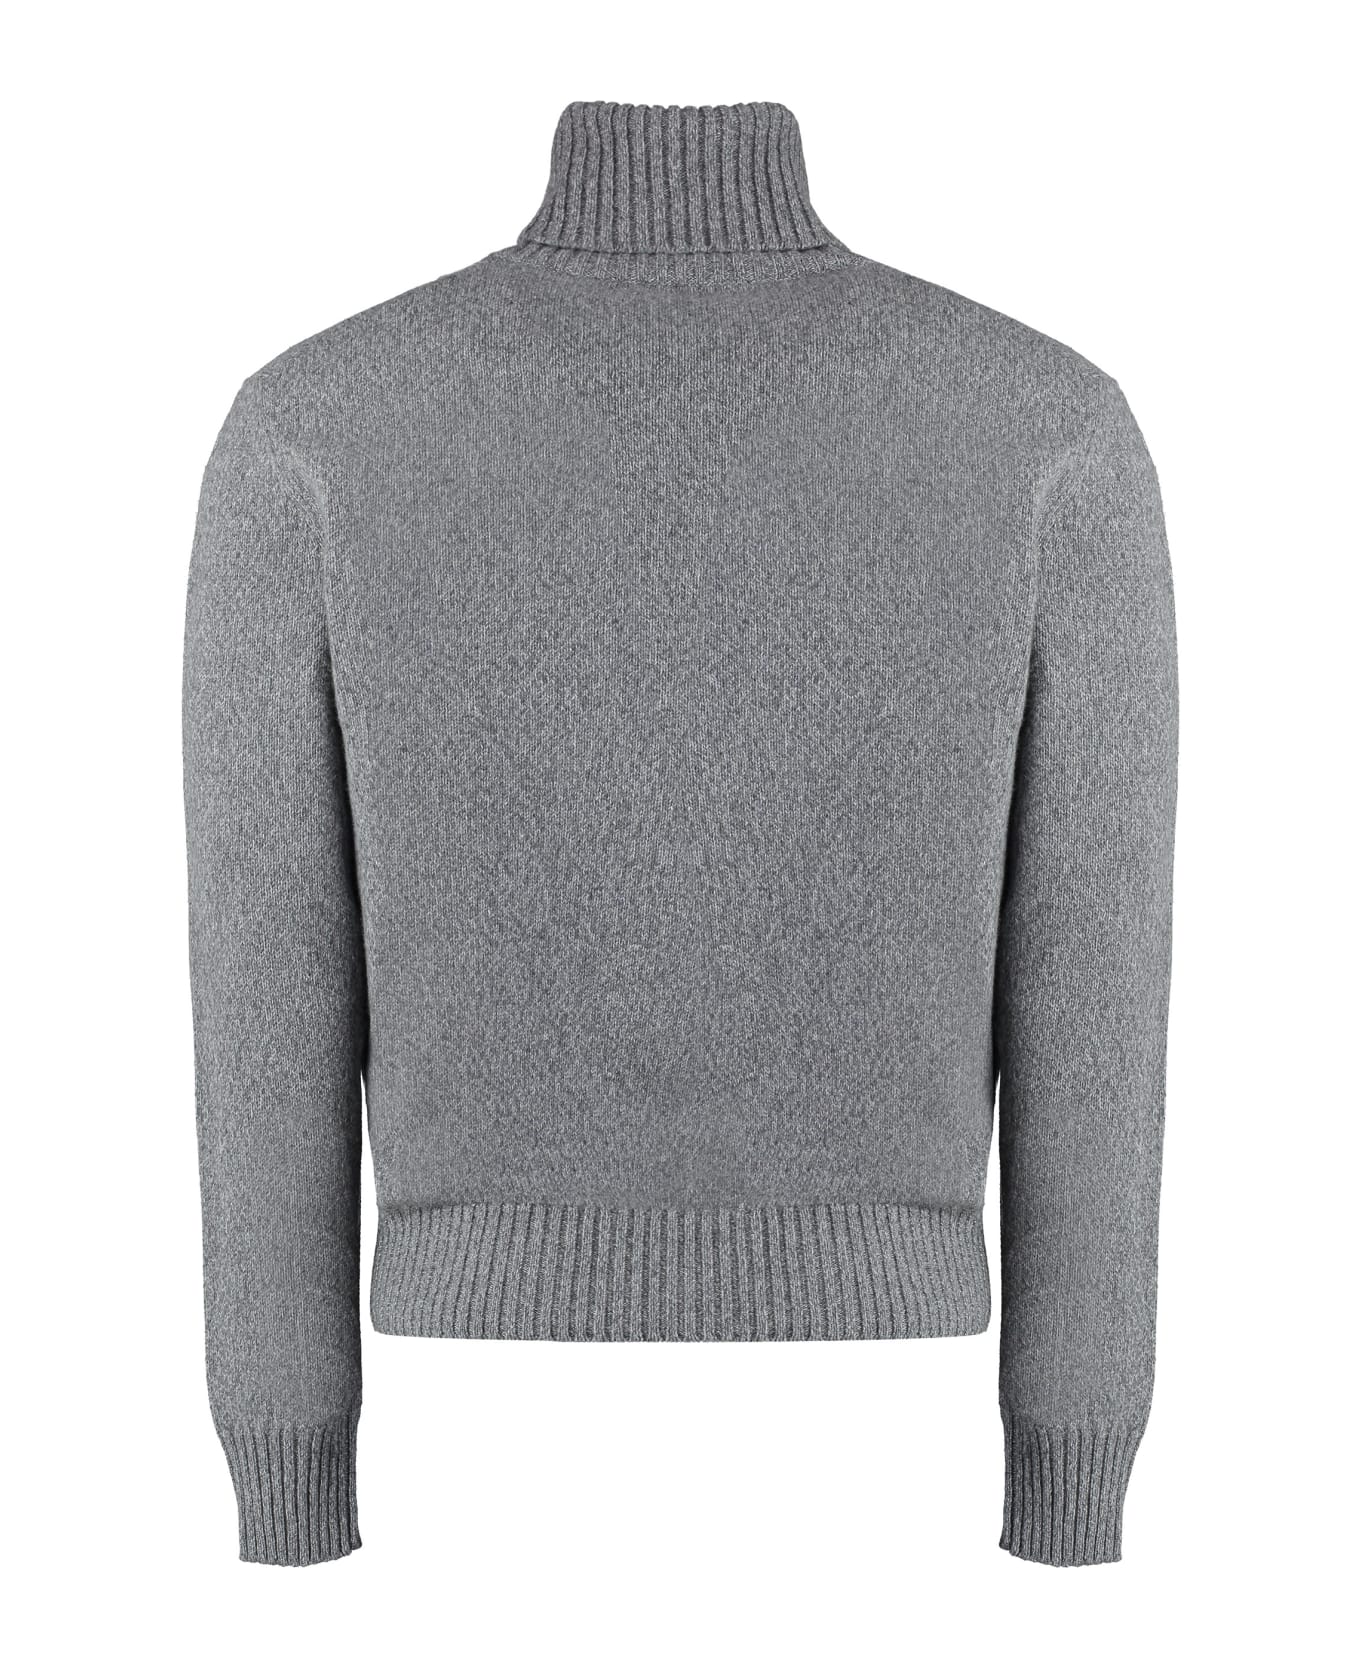 Ami Alexandre Mattiussi Wool And Cashmere Sweater - grey ニットウェア